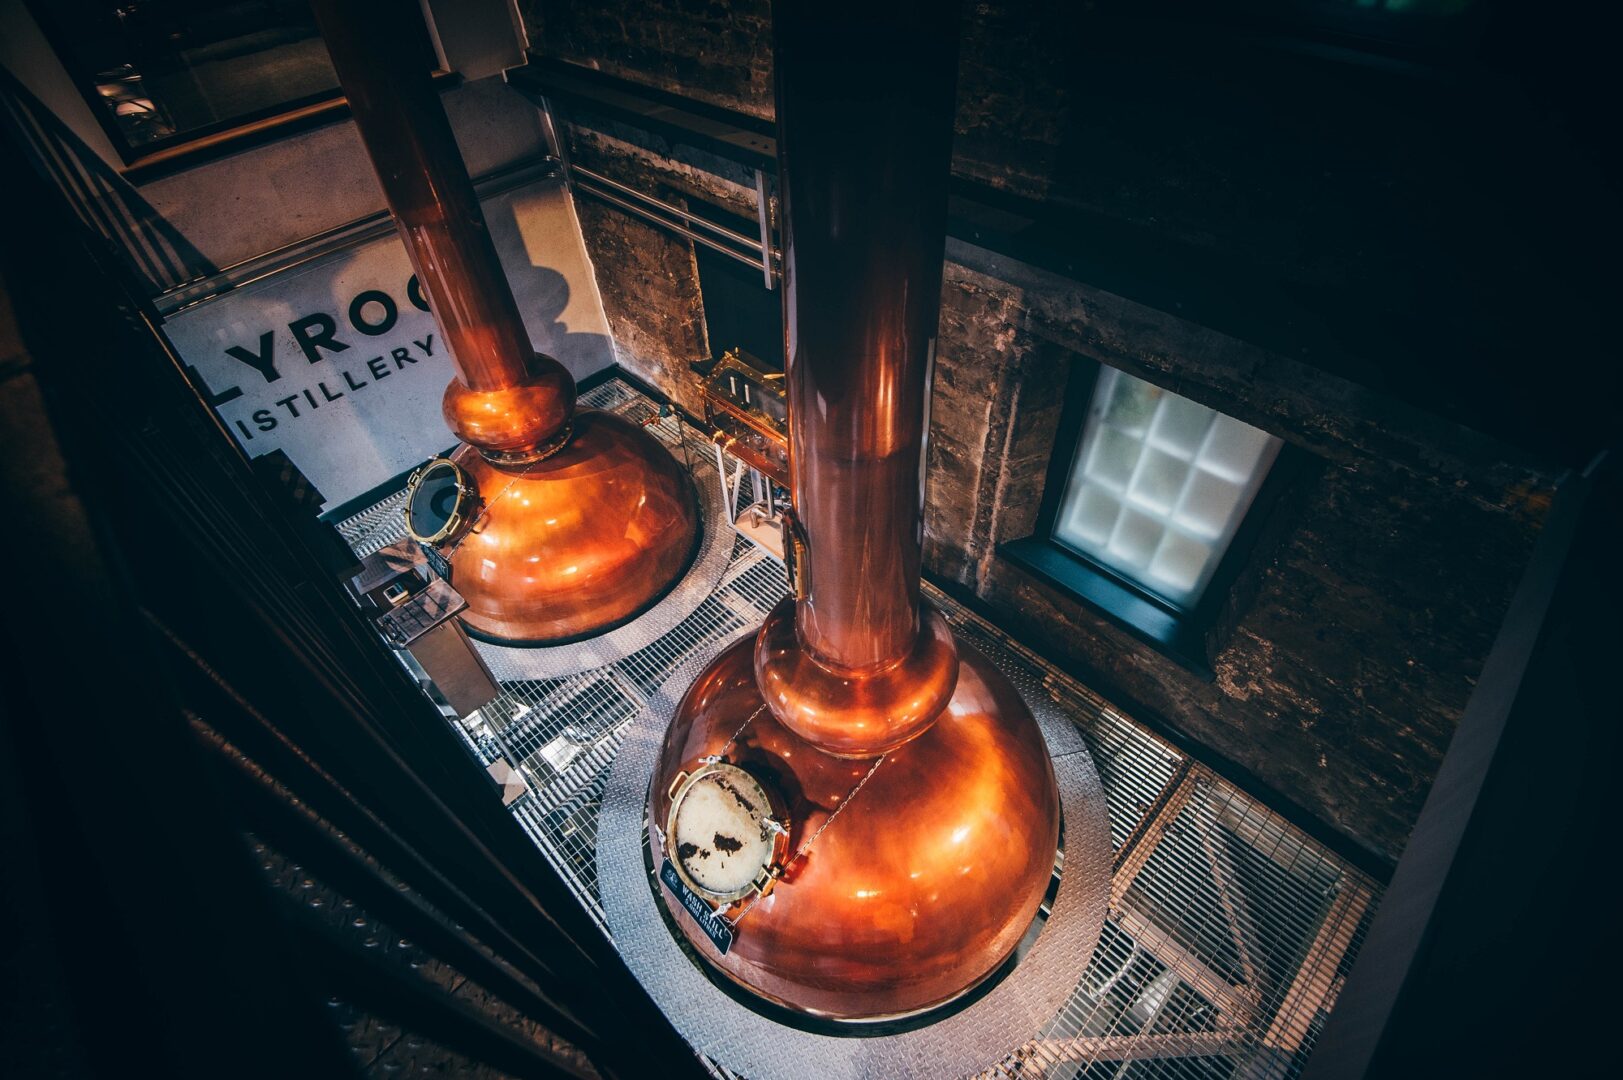 Holyrood Distillery Stills image taken from above